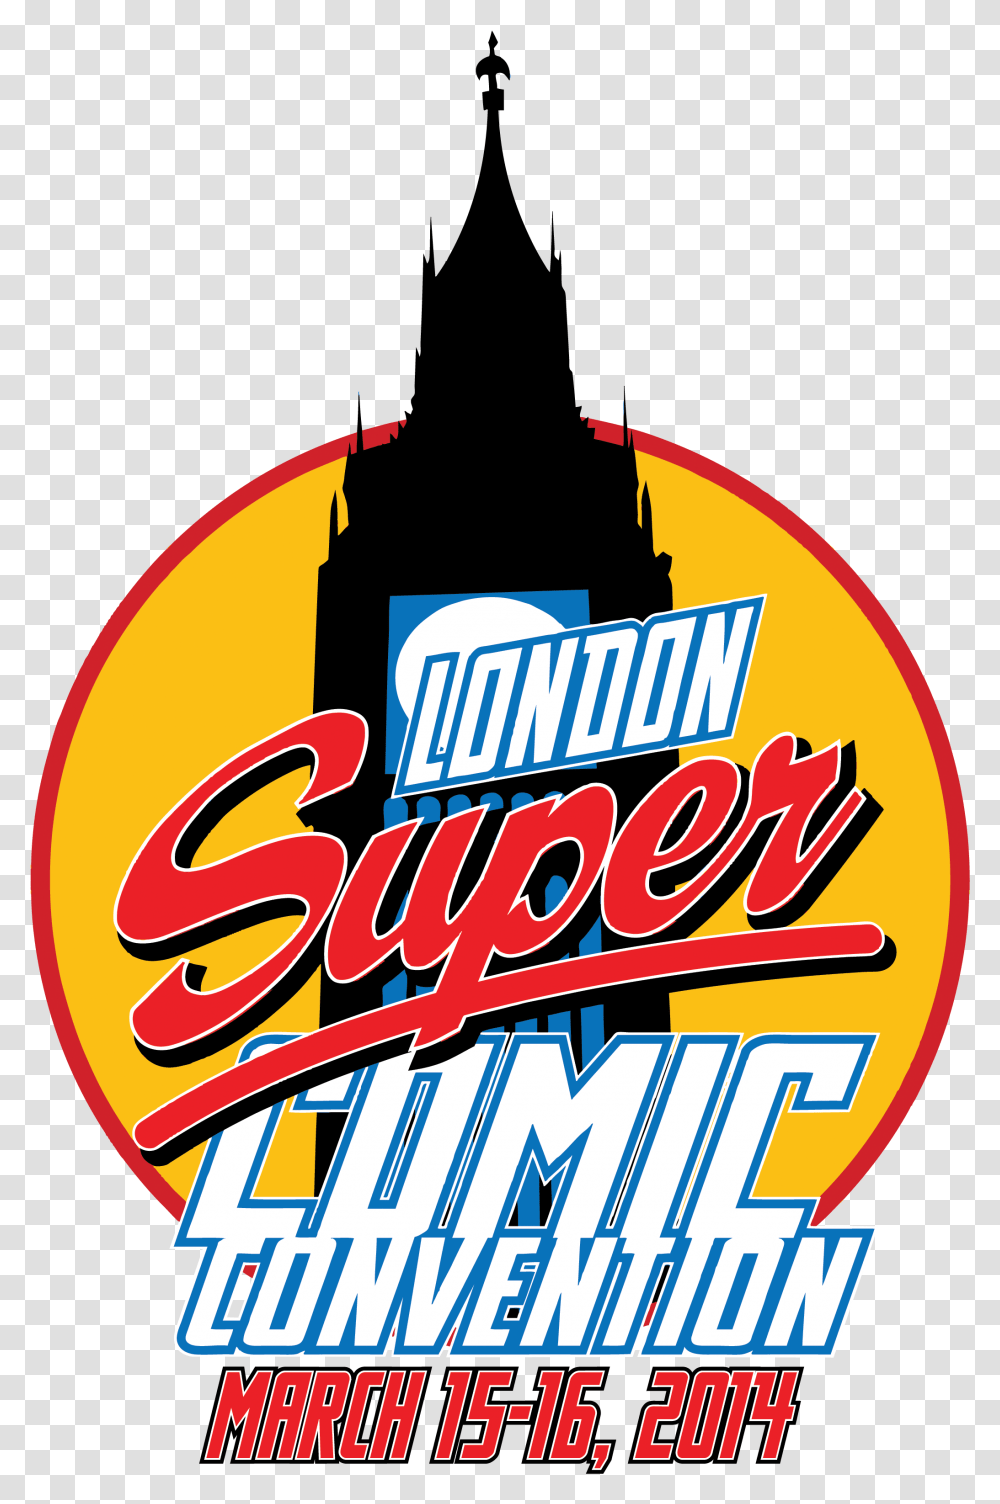 Lscc 2014 Logo With Date Rgb 300dpi London Super Comic Convention, Beverage, Poster Transparent Png